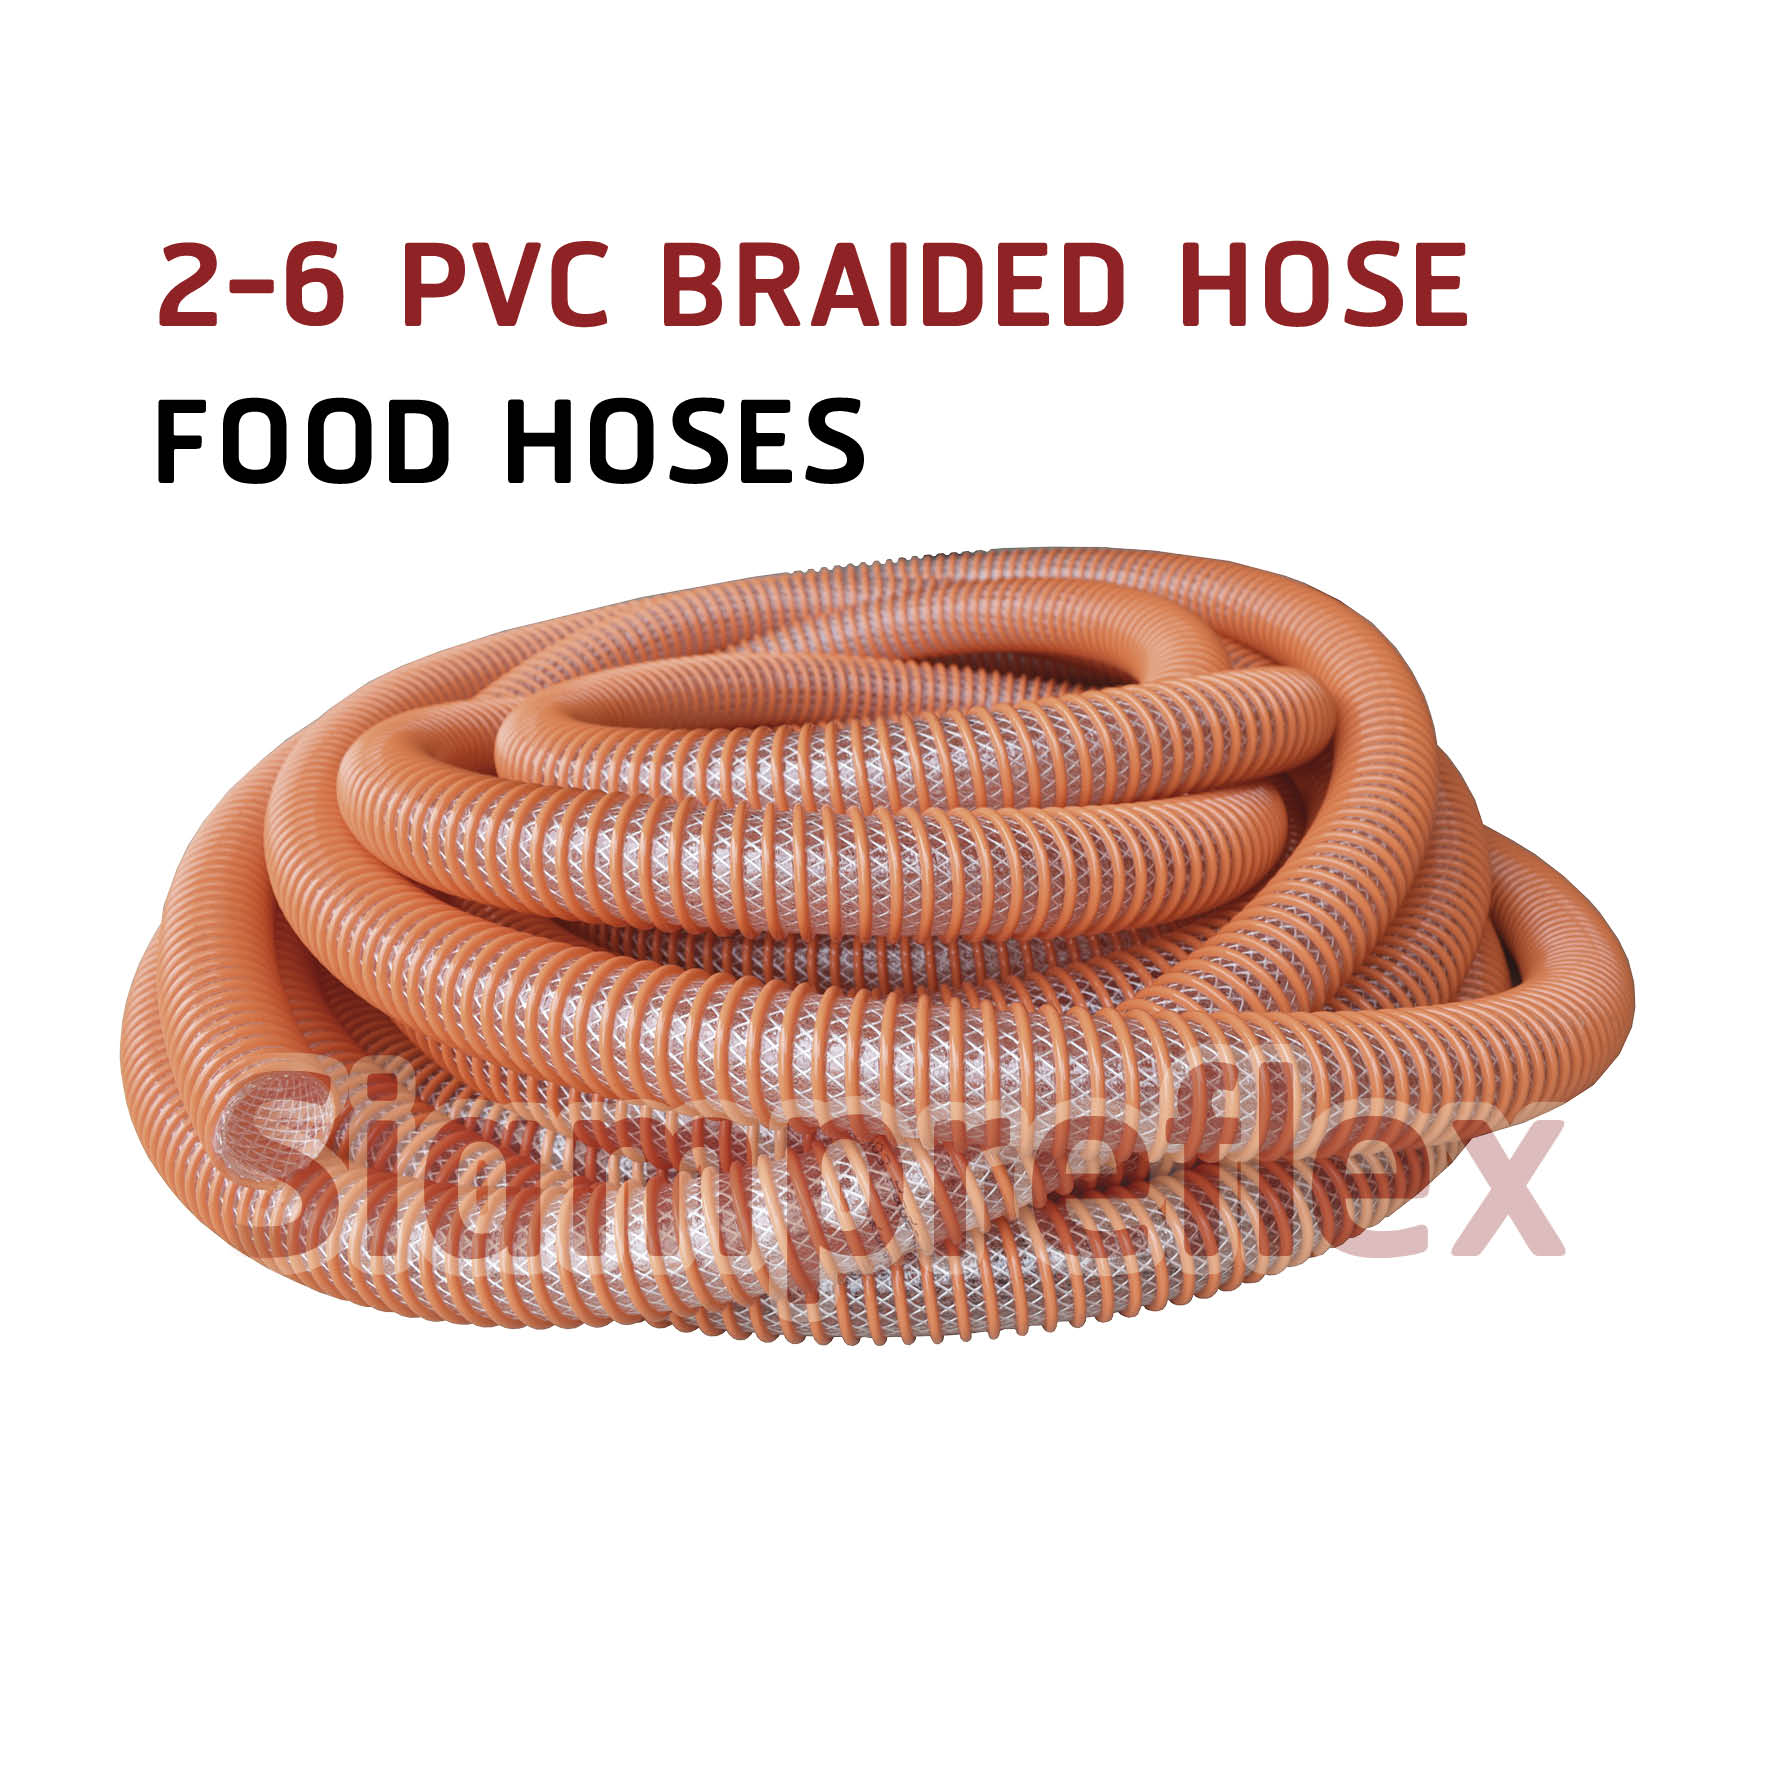 2-6 PVC BRAIDED HOSE FOOD HOSES